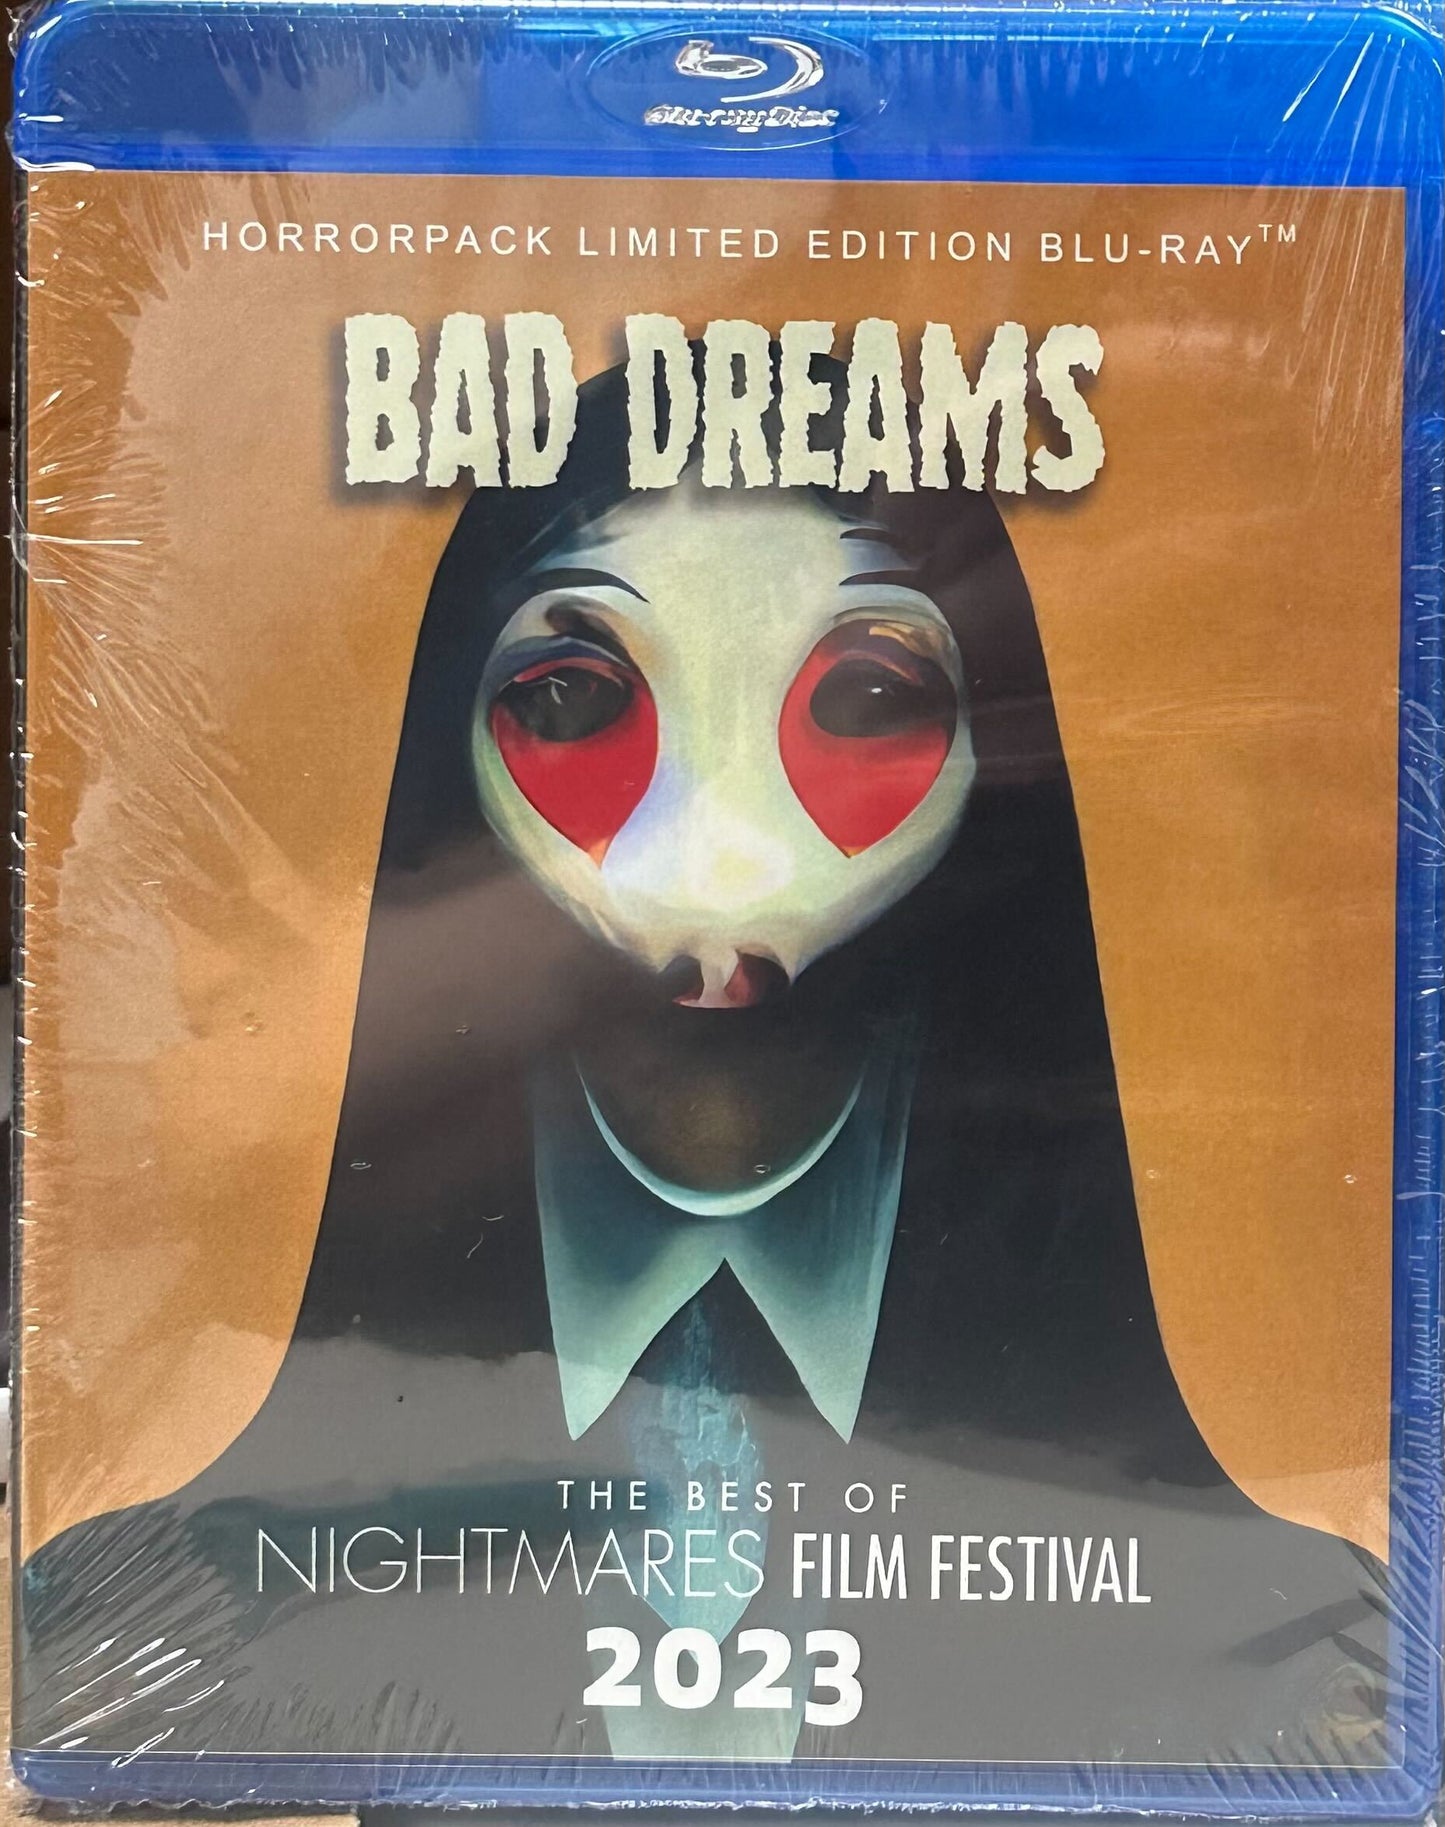 Bad Dreams: The Best of Nightmares Film Festival 2023 Blu-ray